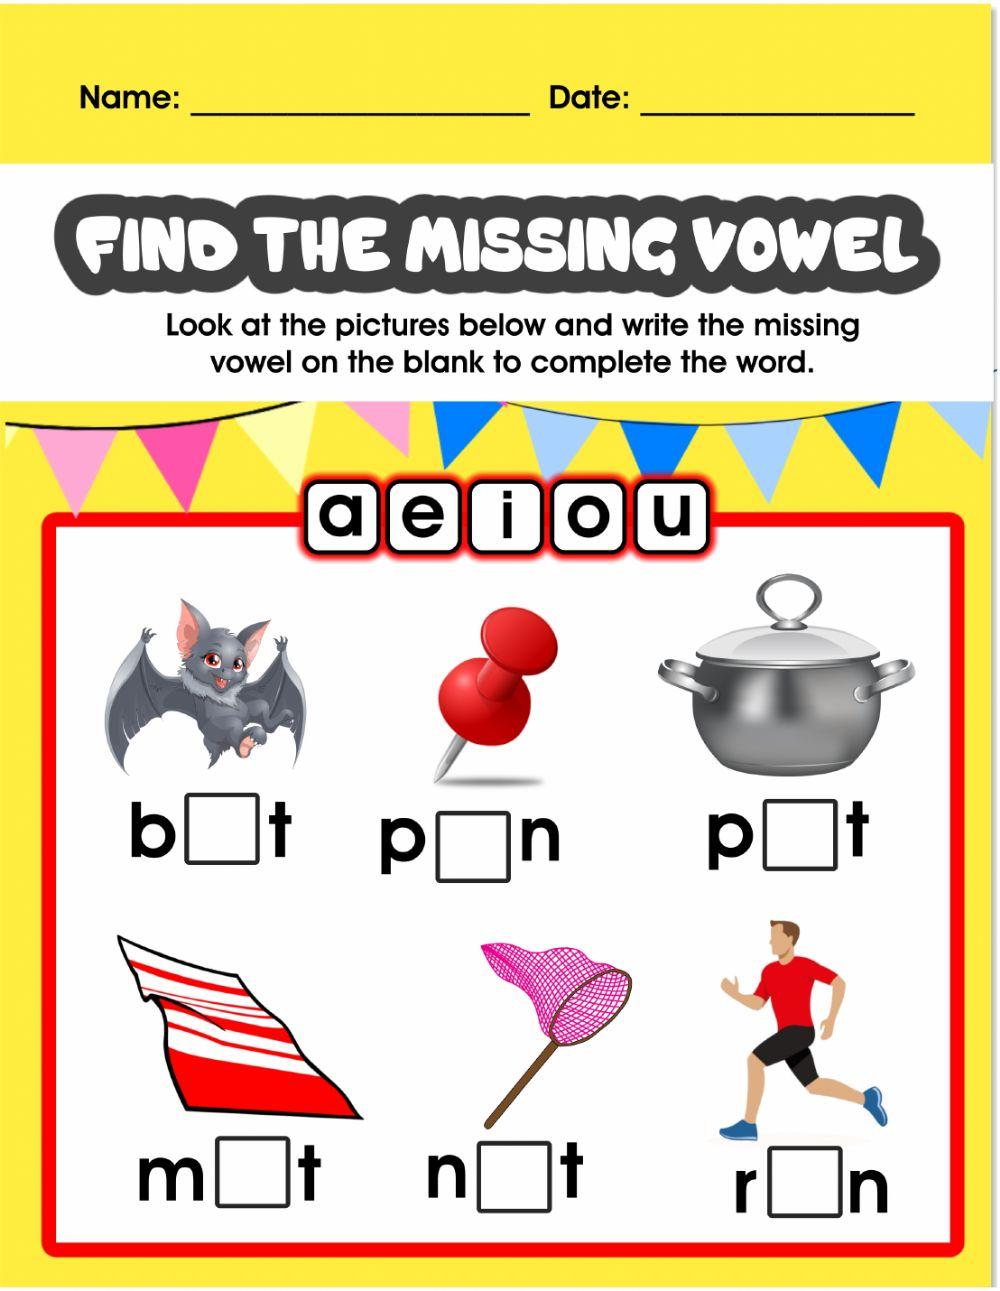 Find the Missing Vowel